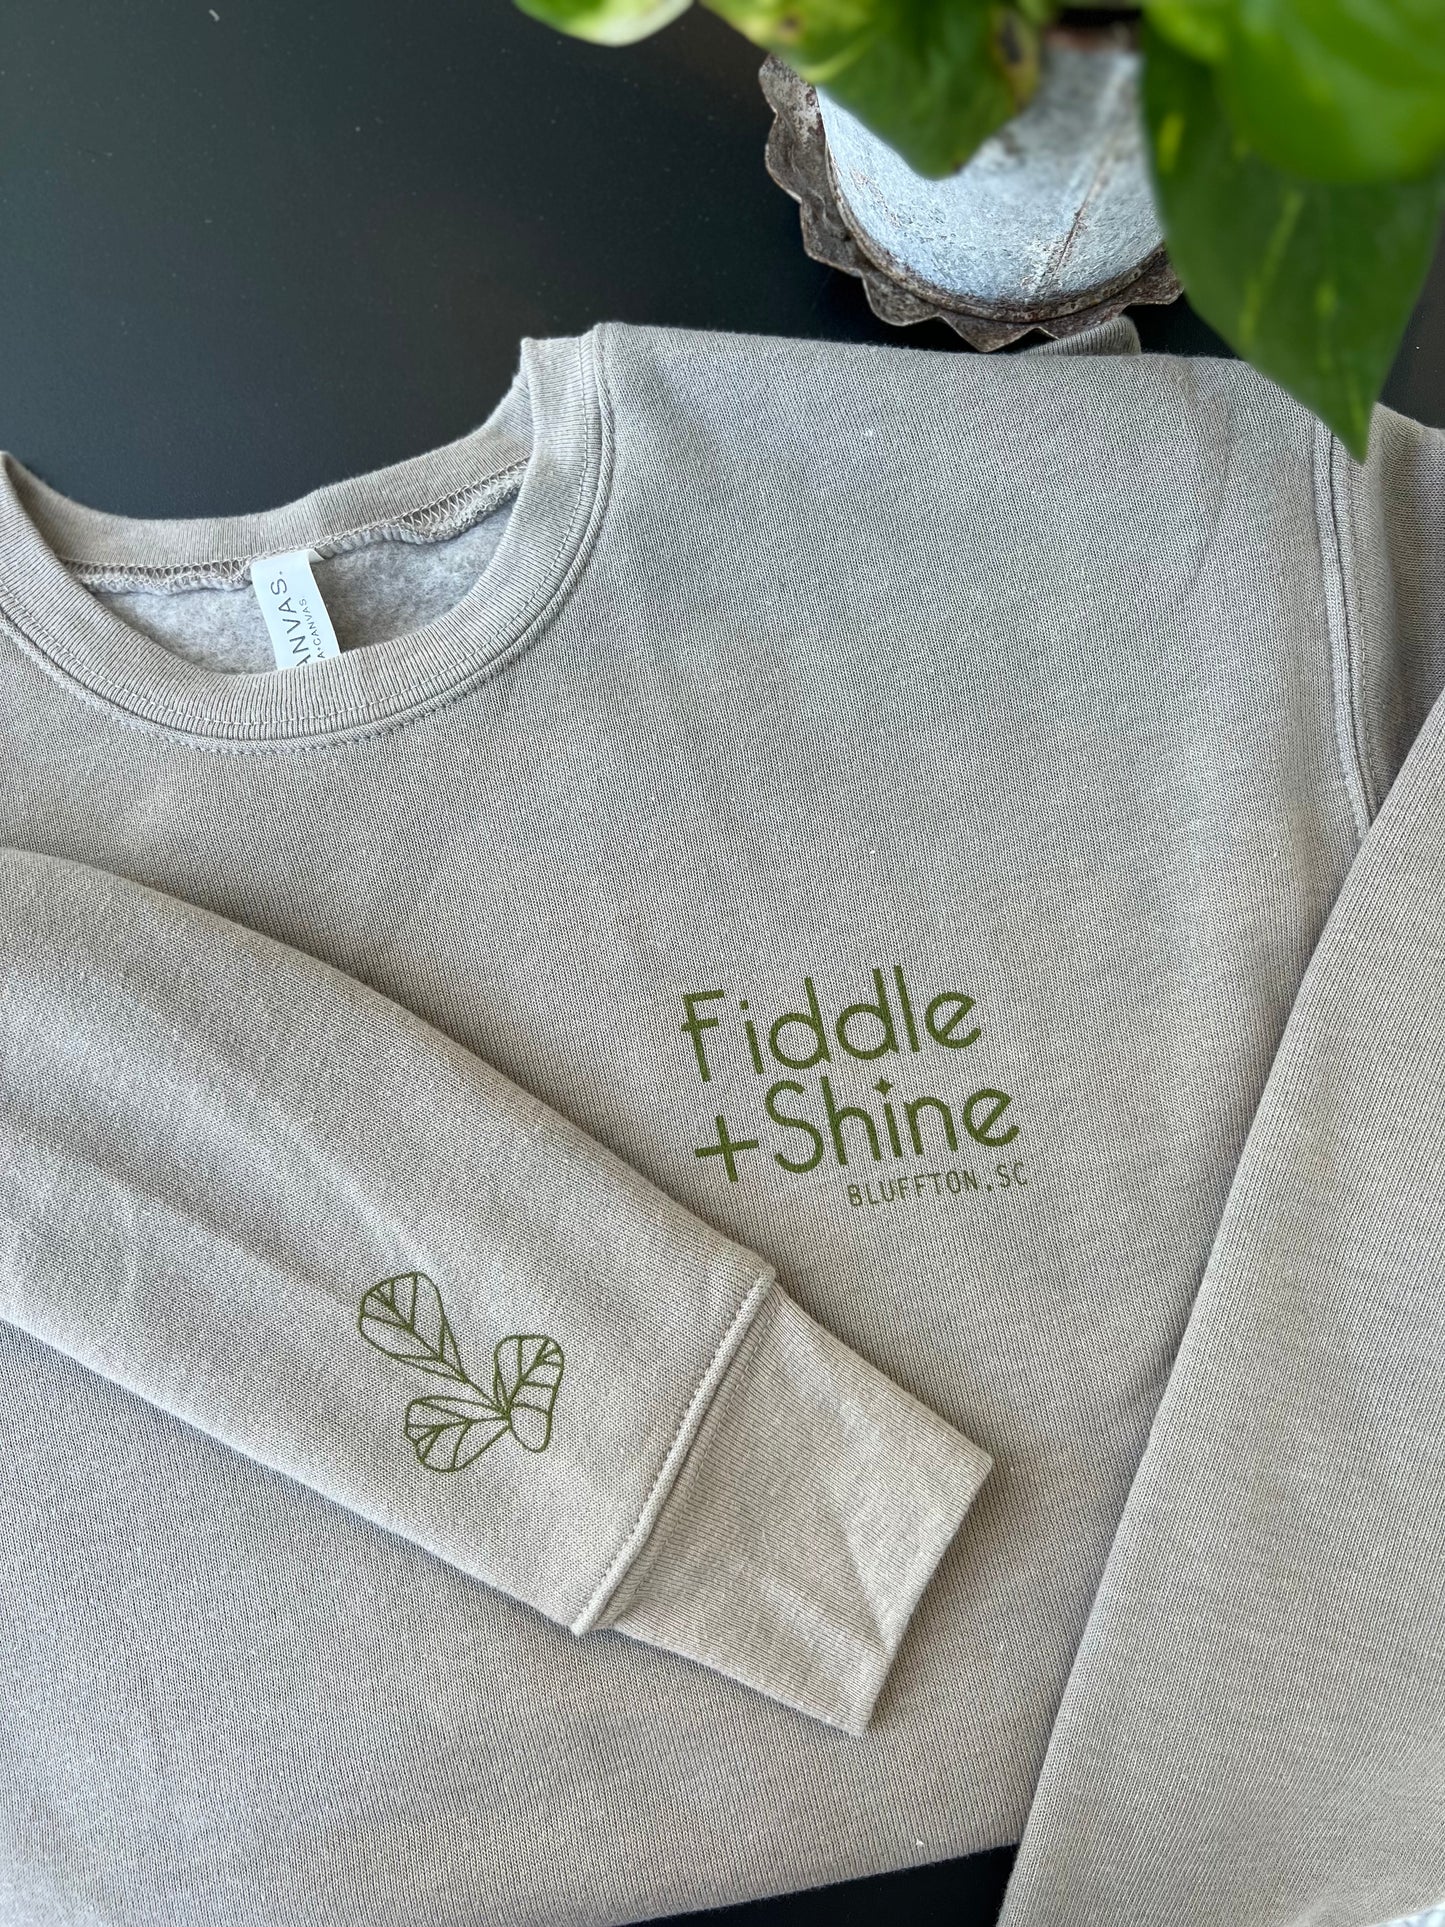 Fiddle + Shine Crew Neck Sweatshirt